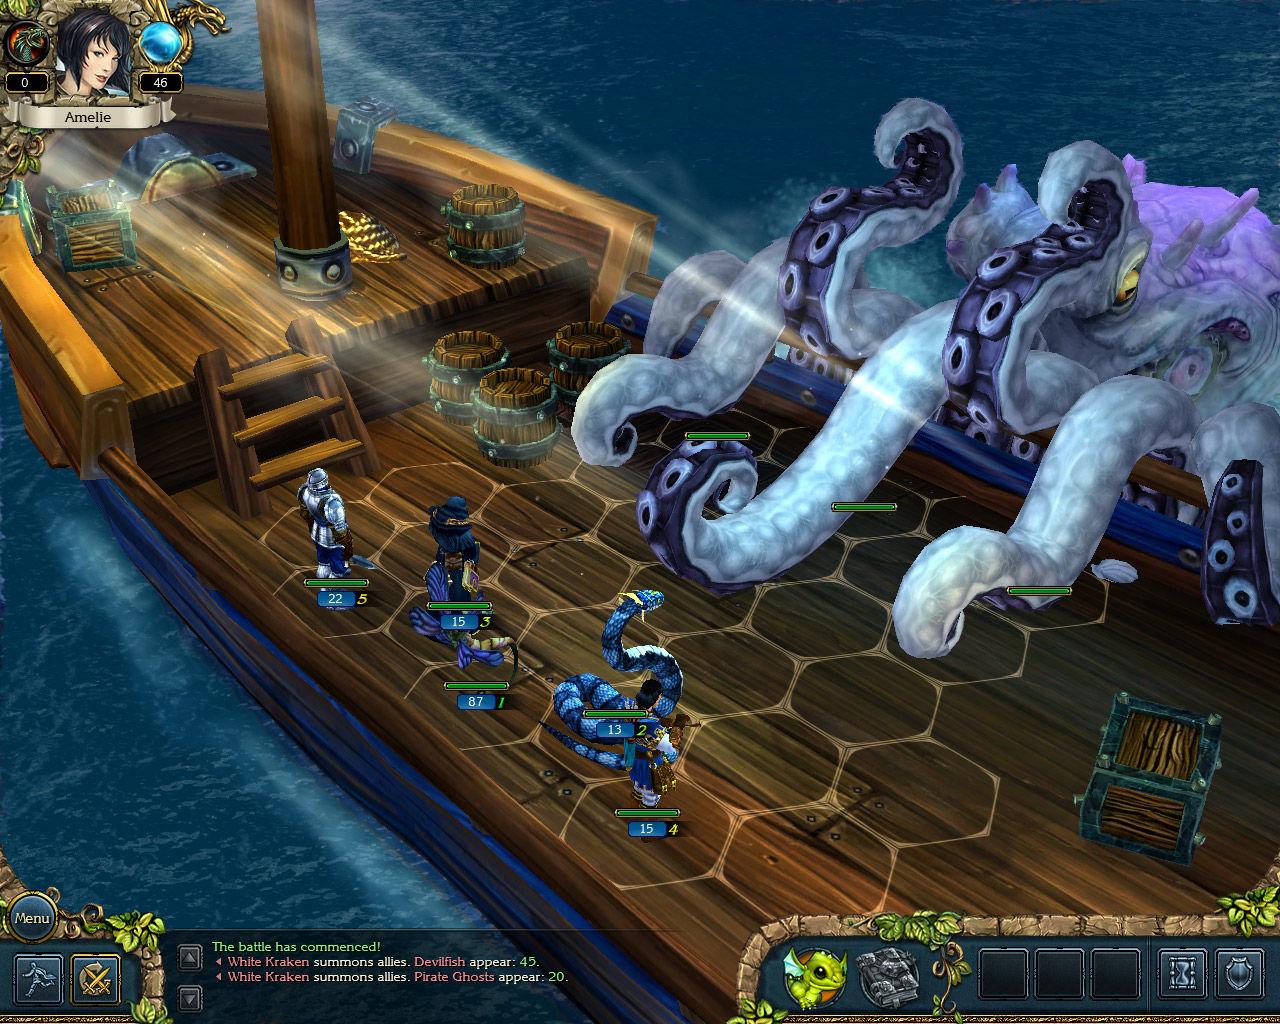 Screenshot №7 from game King's Bounty: Crossworlds